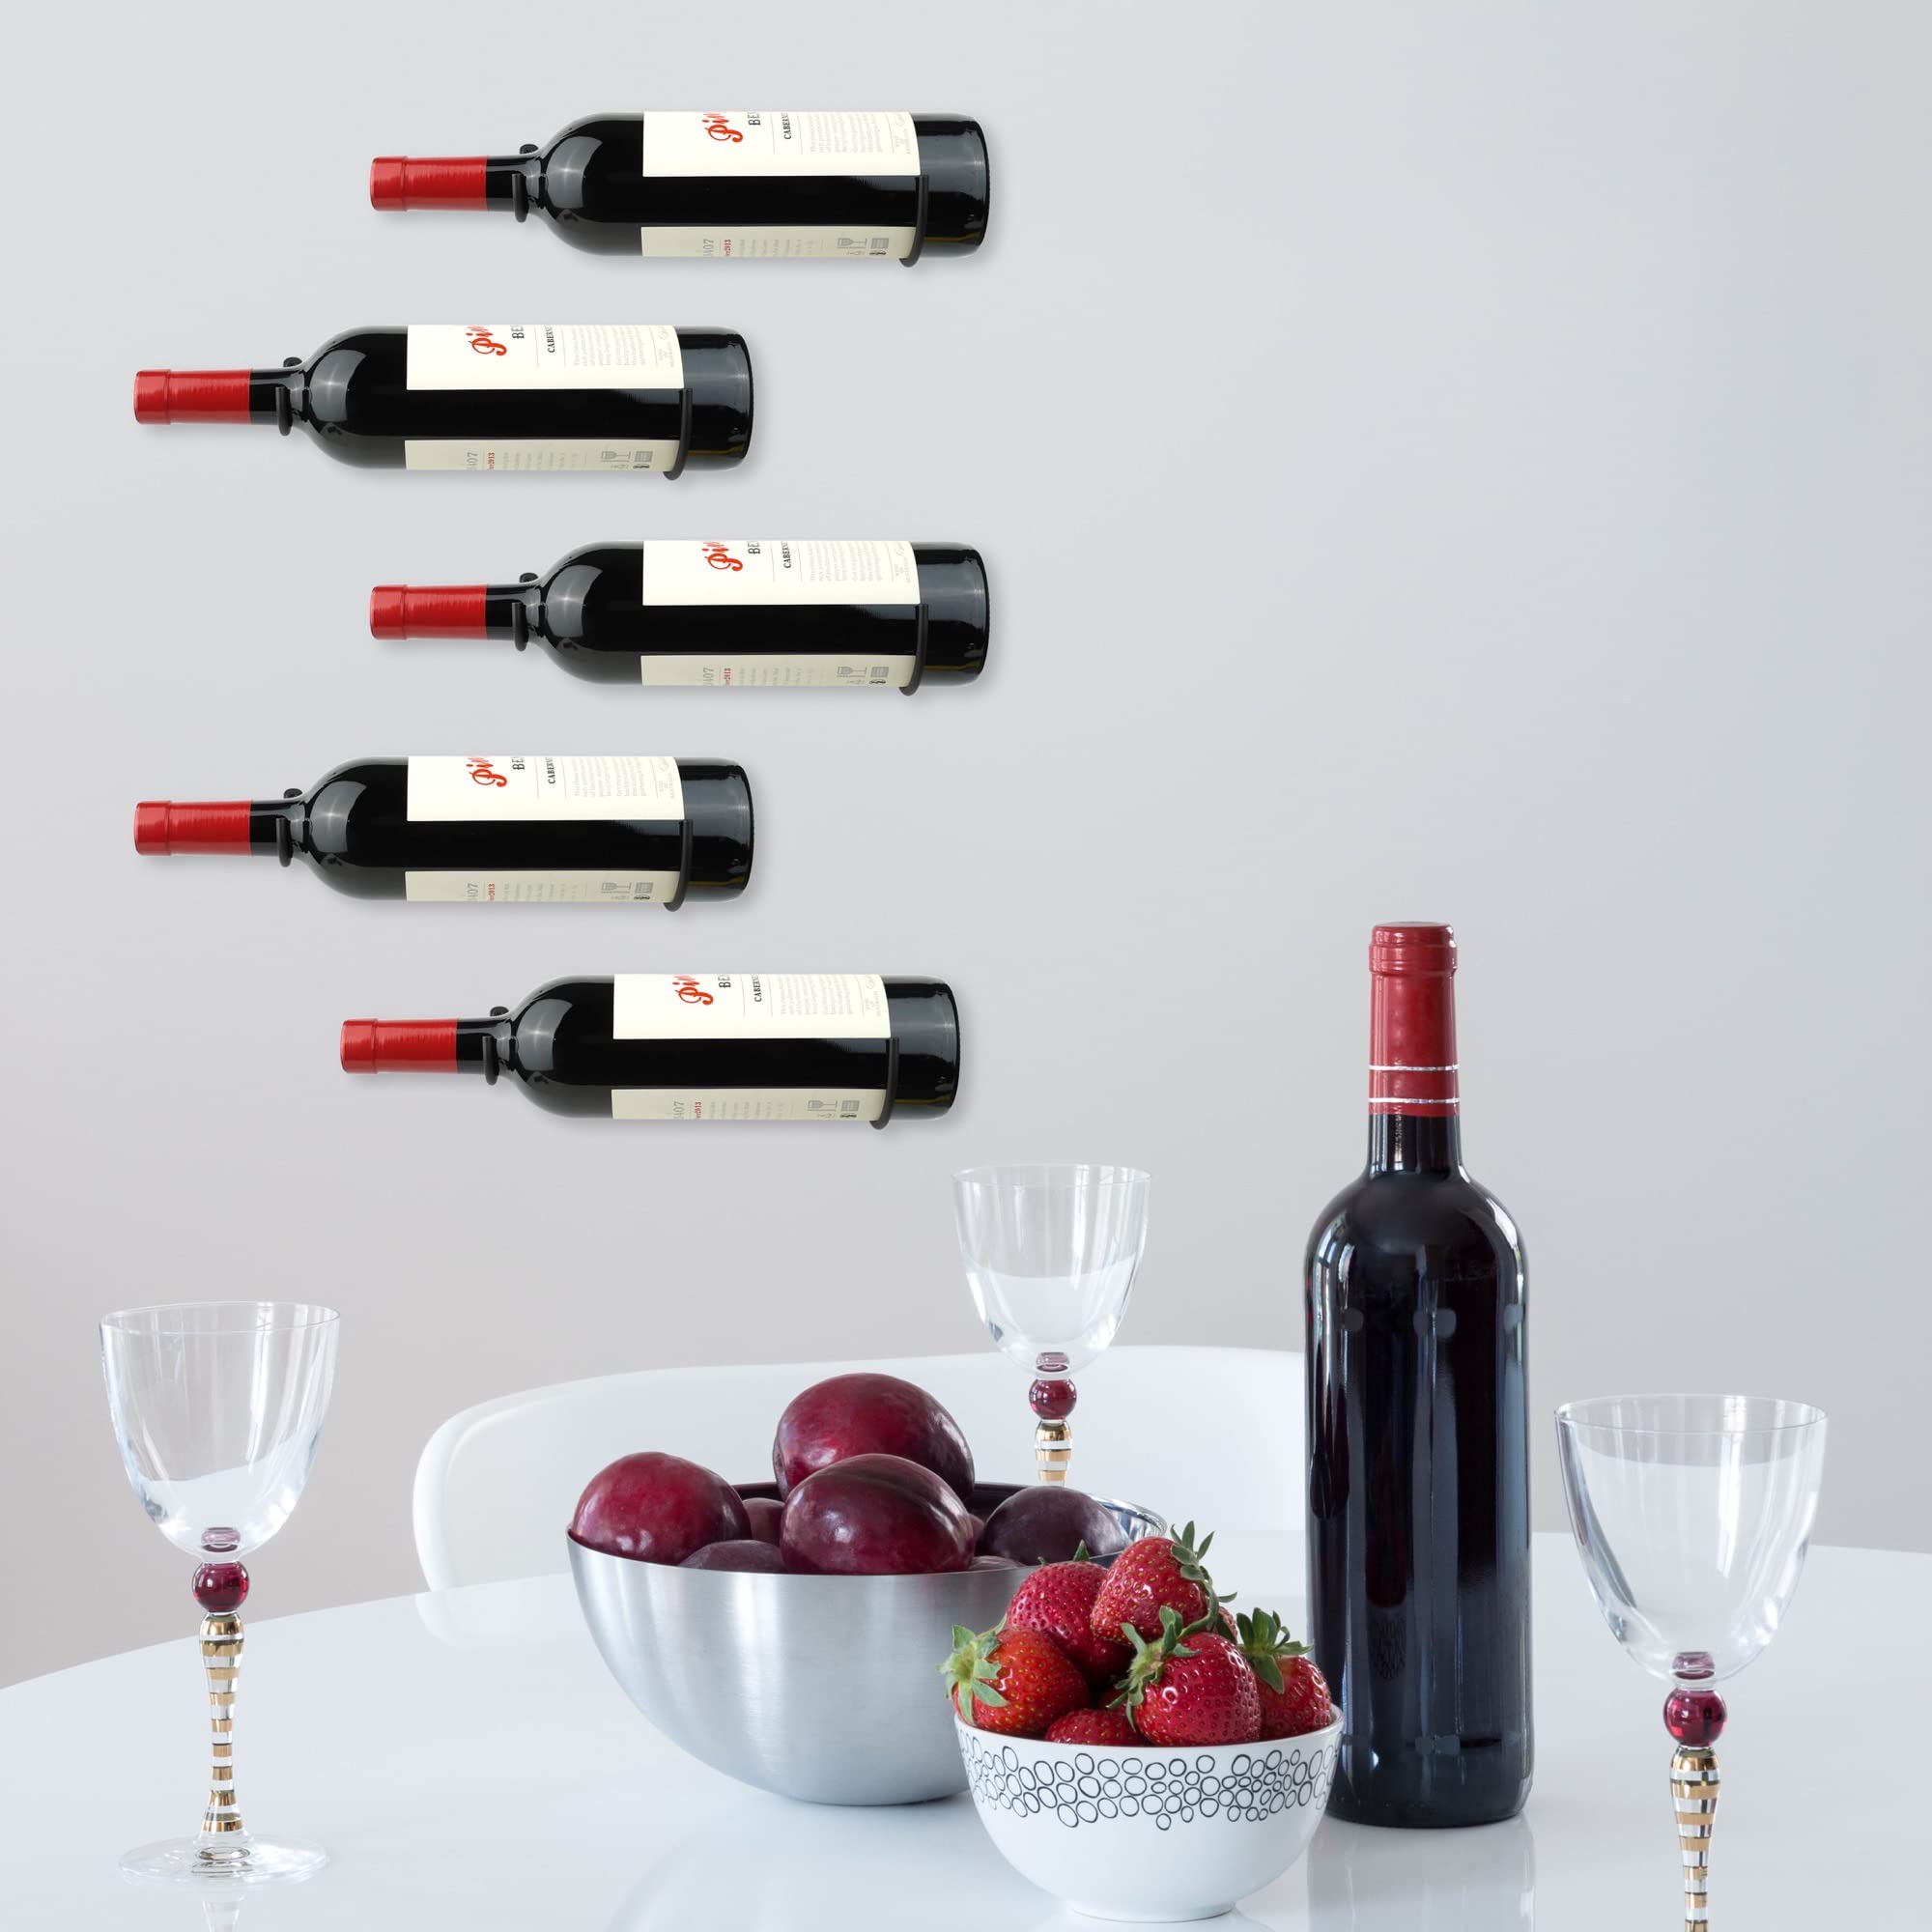 AQAREA Wall-Mounted Wine Hook: Hanging Wine Bottle Wall Holder - Set of 3 Metal Wall Red Wine Rack Hooks